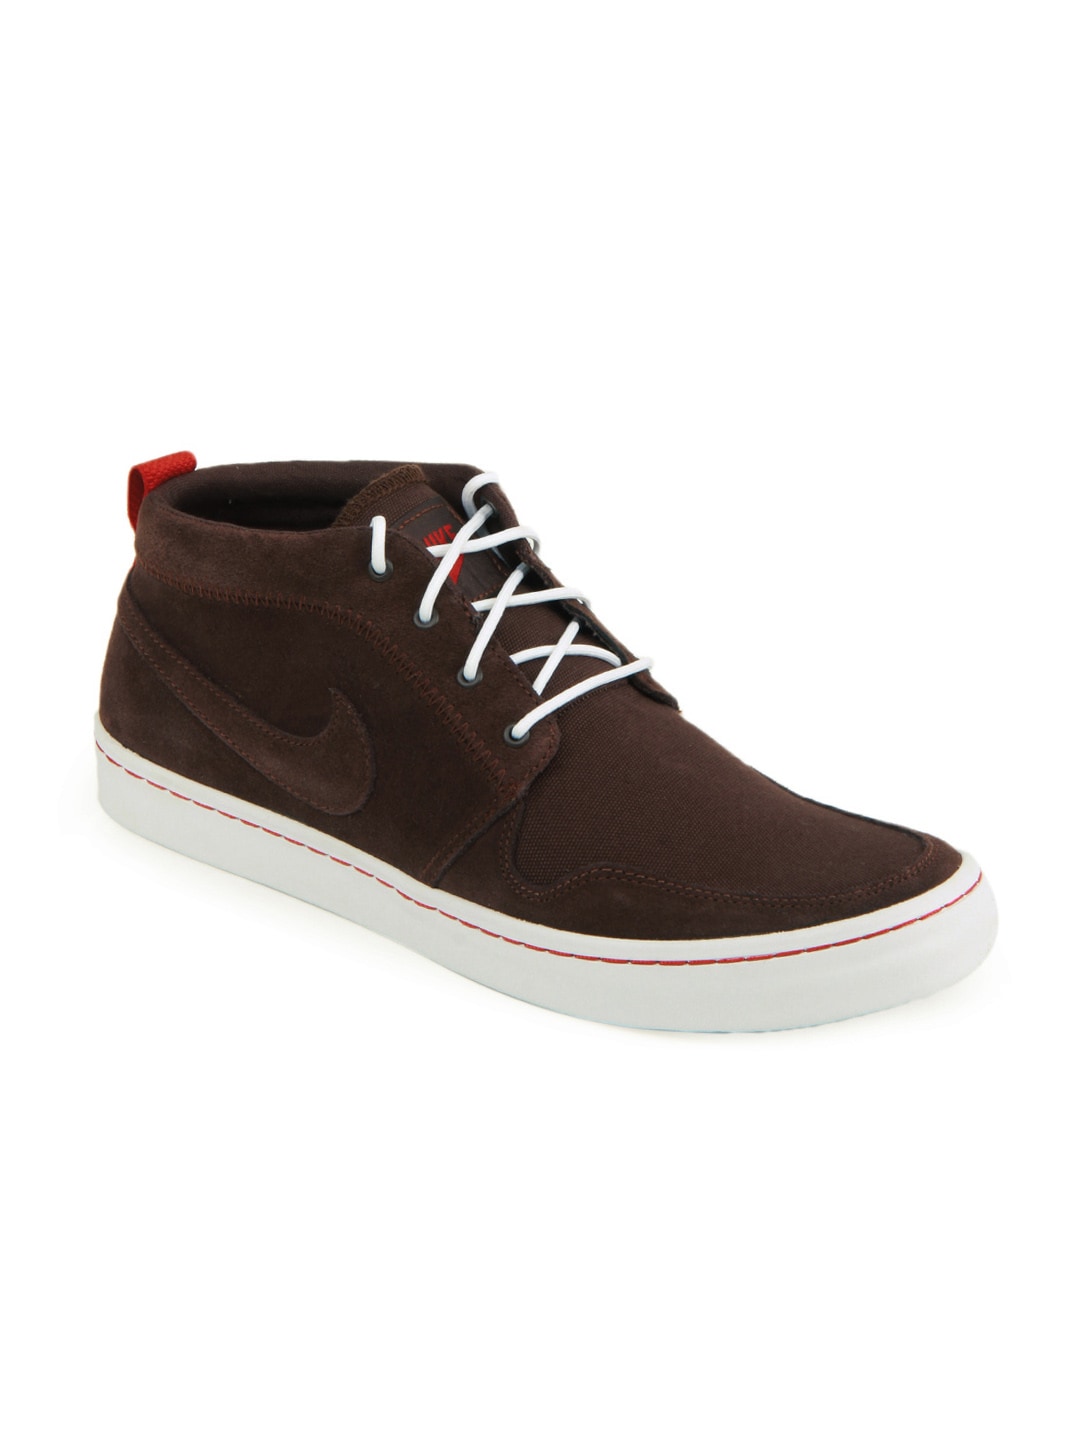 Nike Men Brown Wardour Chukka Casual Shoes - 288 - Footwear for Men ...